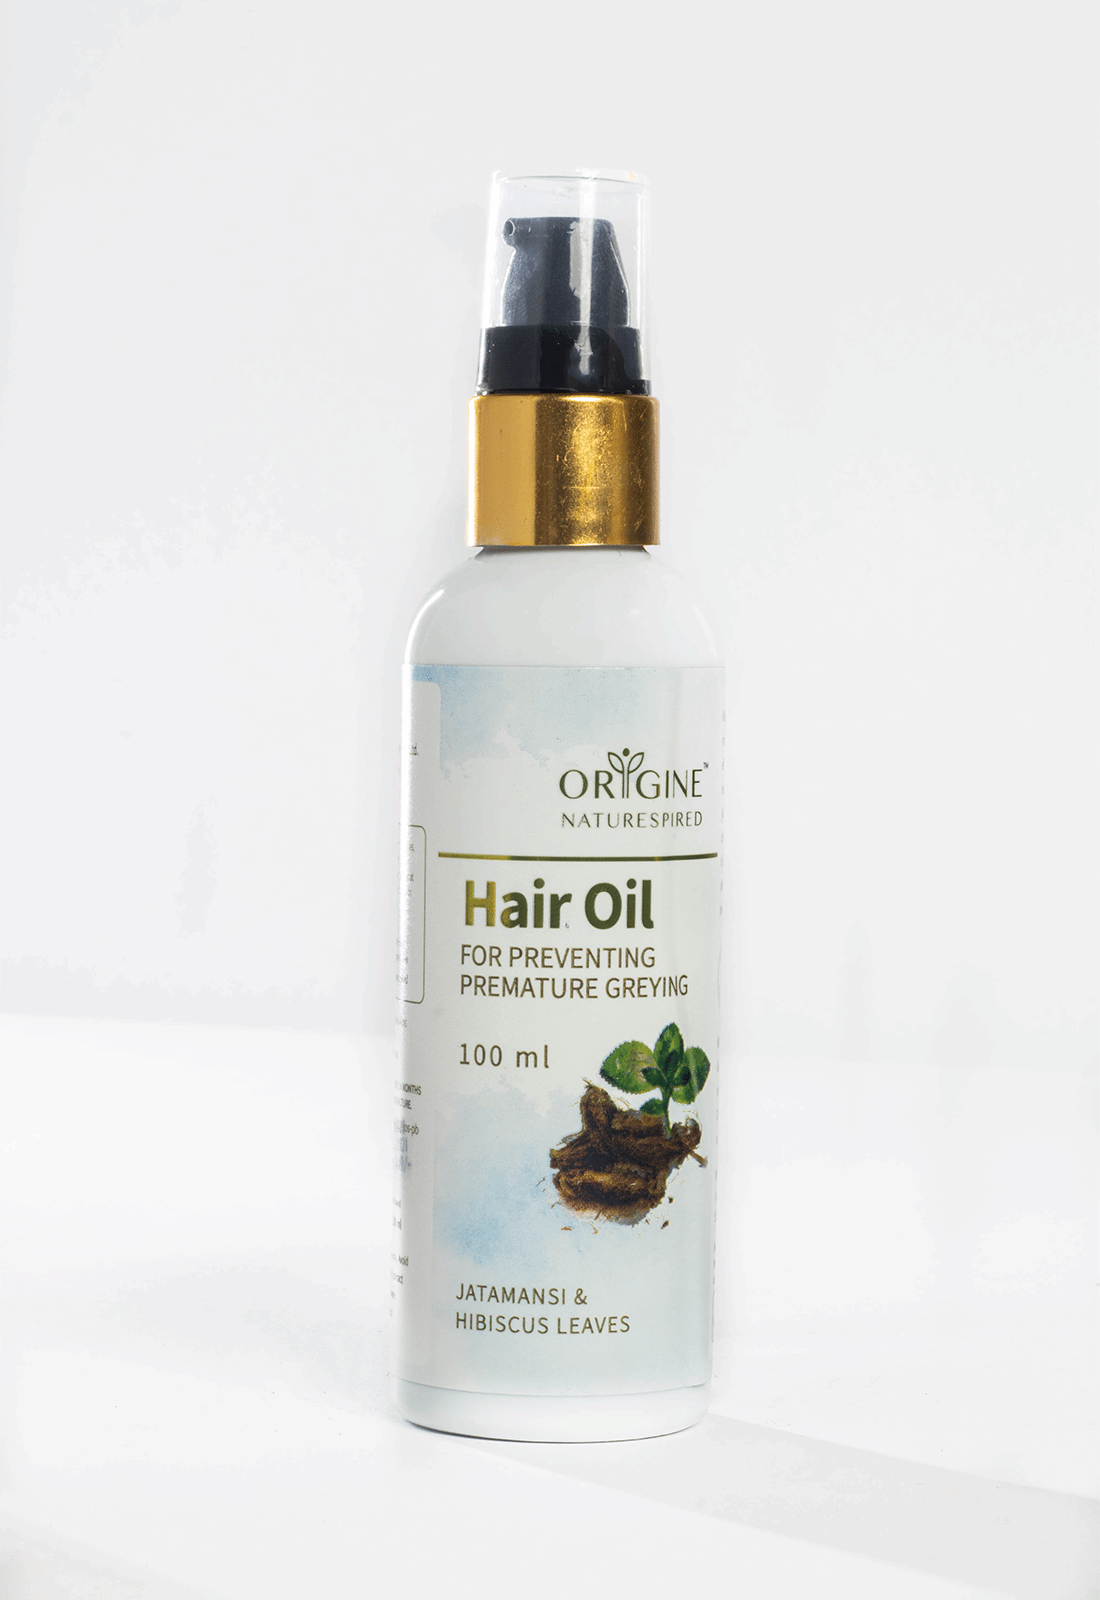 Godrej Anoop Hair Oil full review in Hindi  जन असल सच